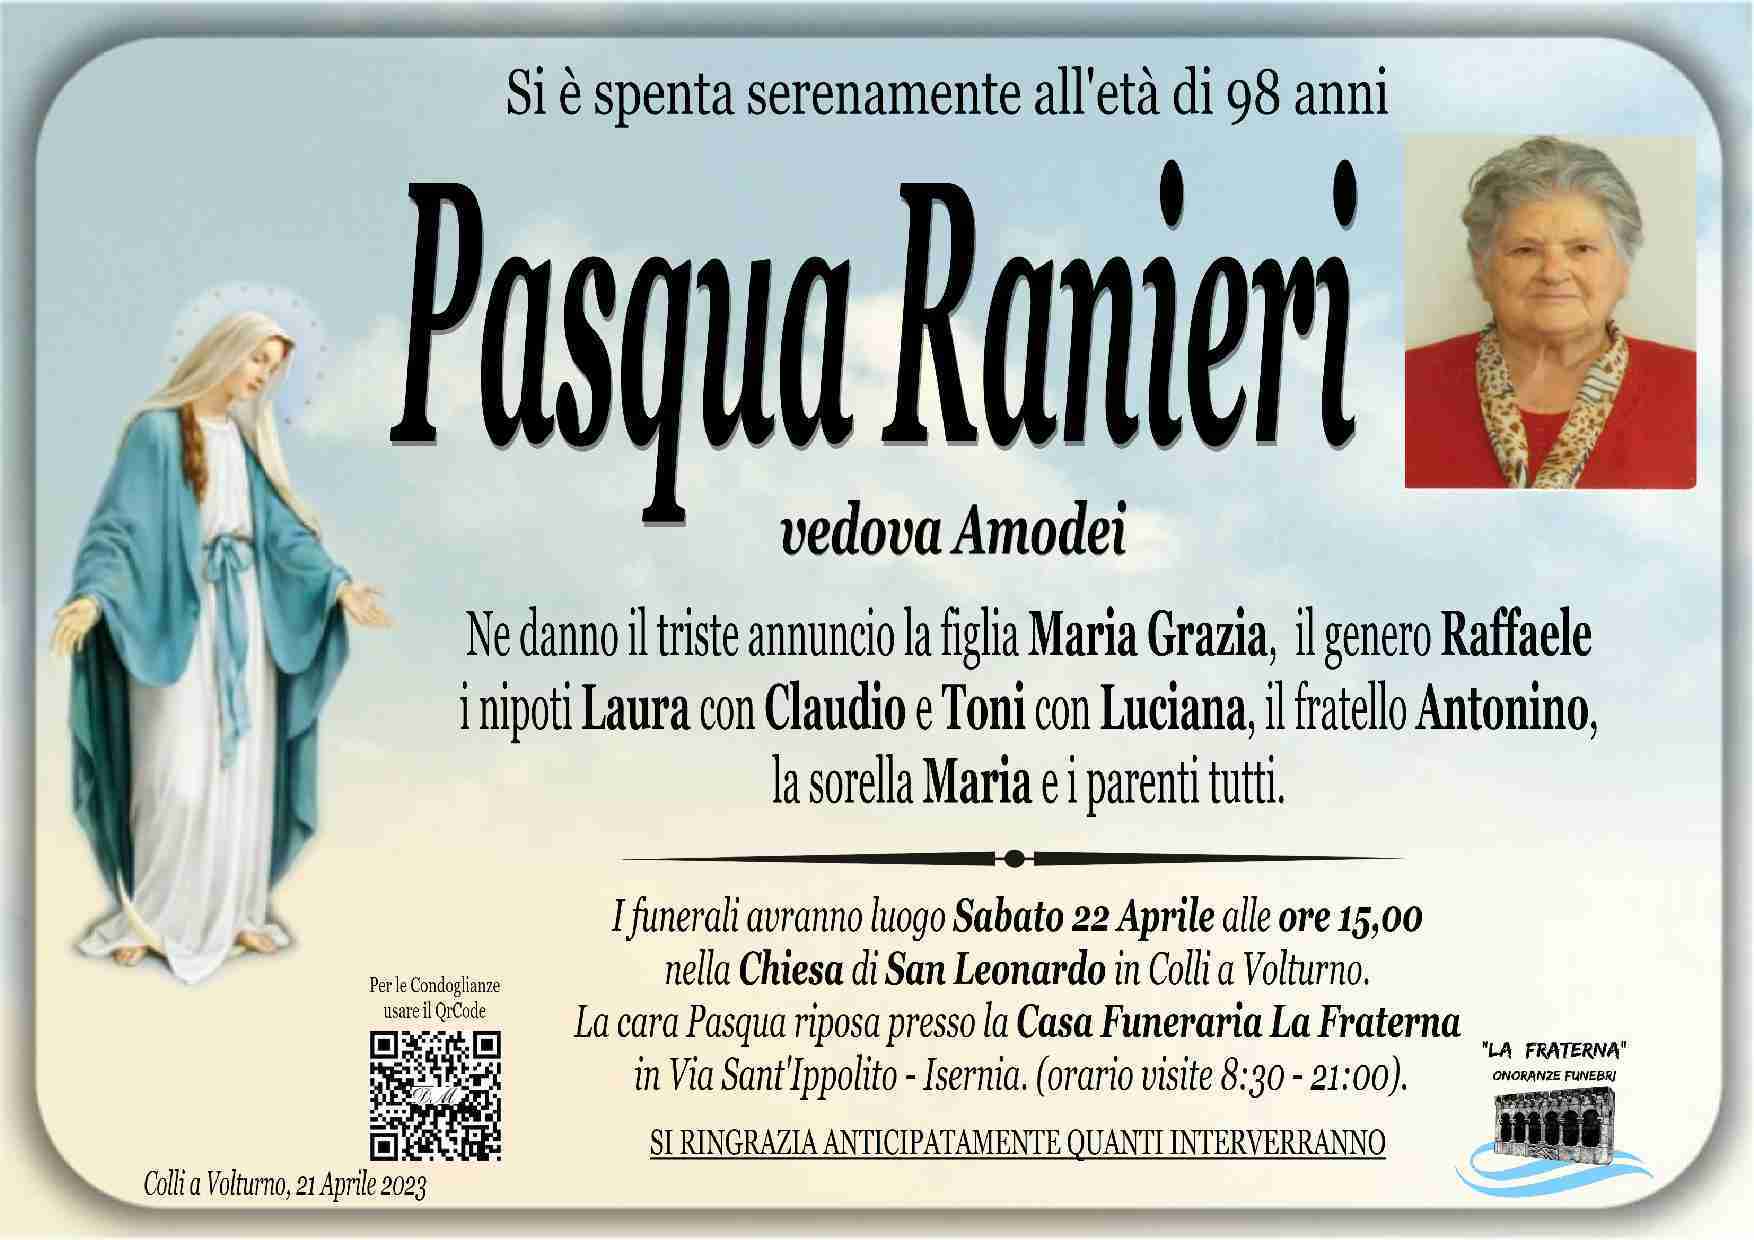 Pasqua Ranieri